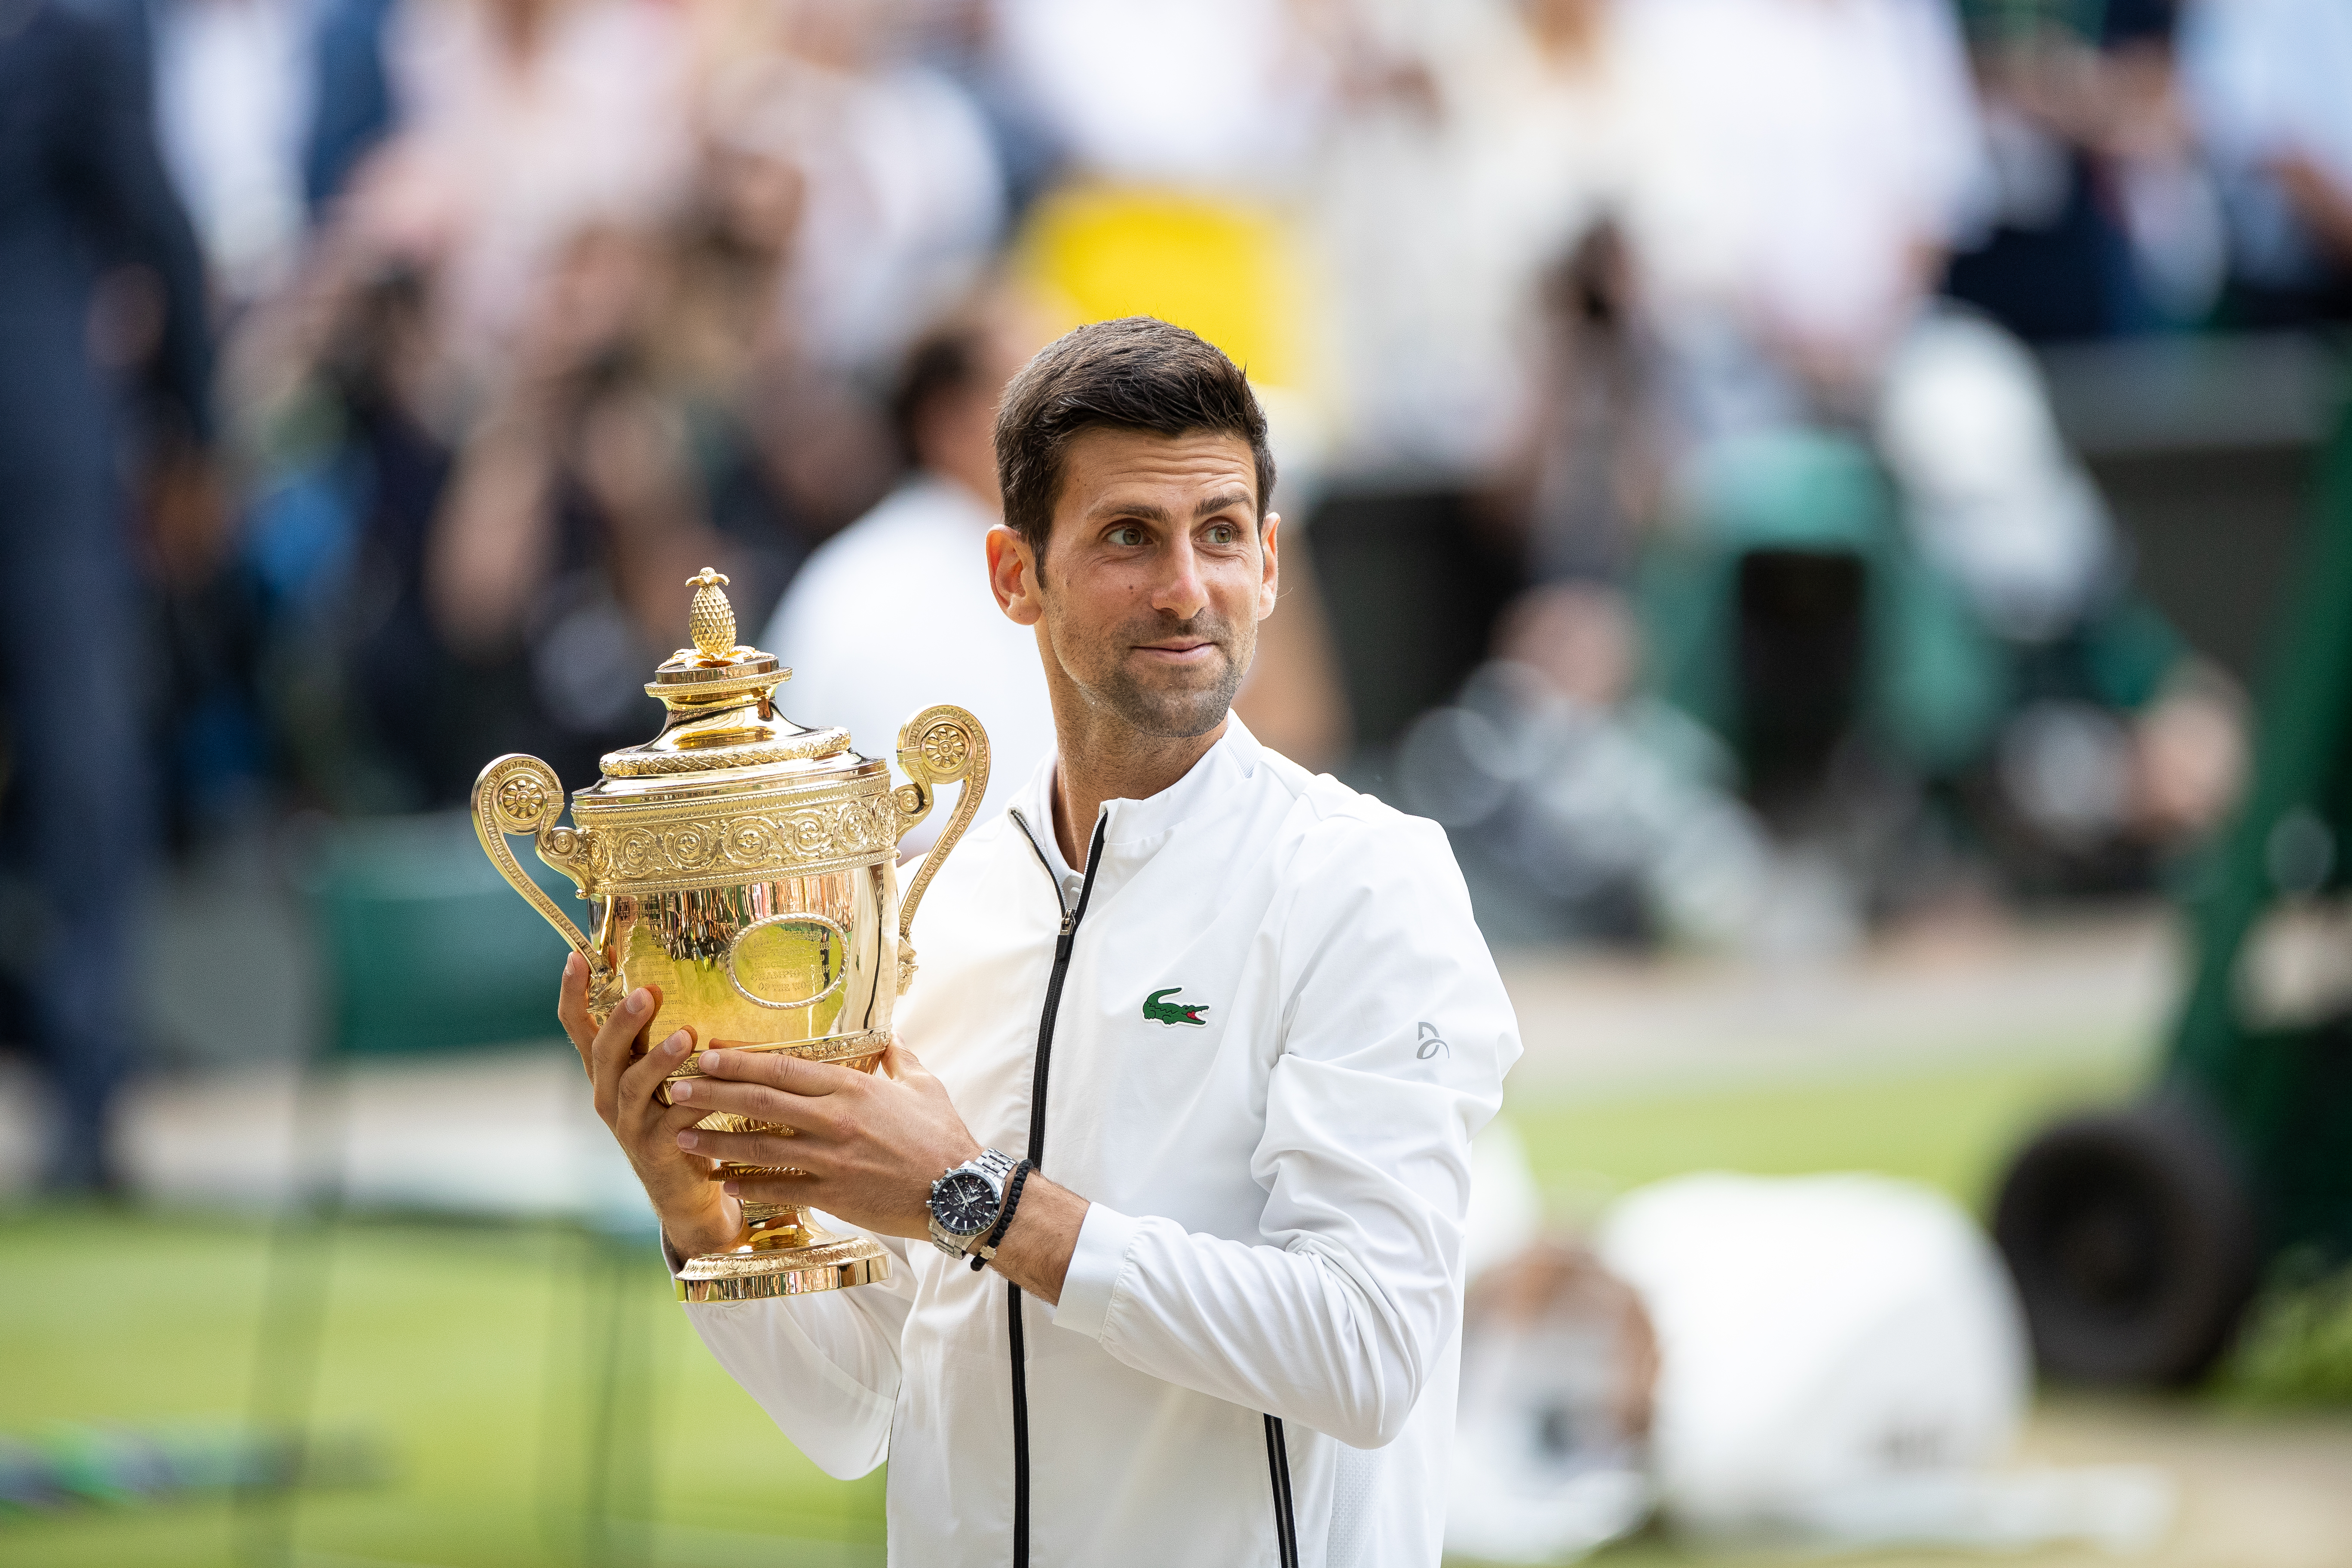 Wimbledon 2021: Round 2 TV schedule, time, live stream  How to watch Roger  Federer, Novak Djokovic, more 